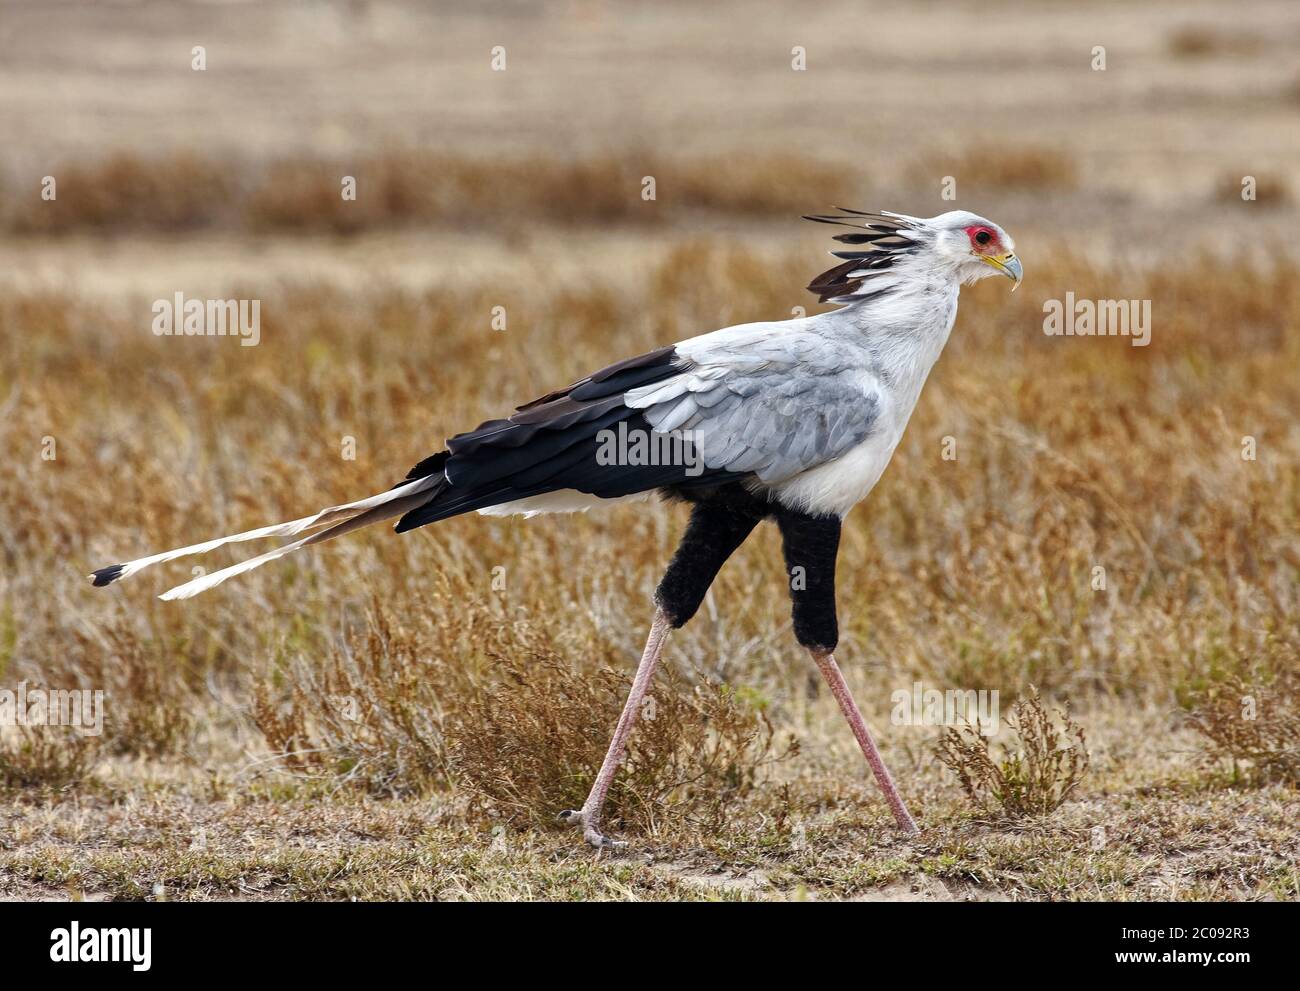 Secretary bird walking, large bird of prey, Sagittarius serpentarius, long legs, 4 feet tall, black, white, grey, small plume, hooked bill, long tail Stock Photo